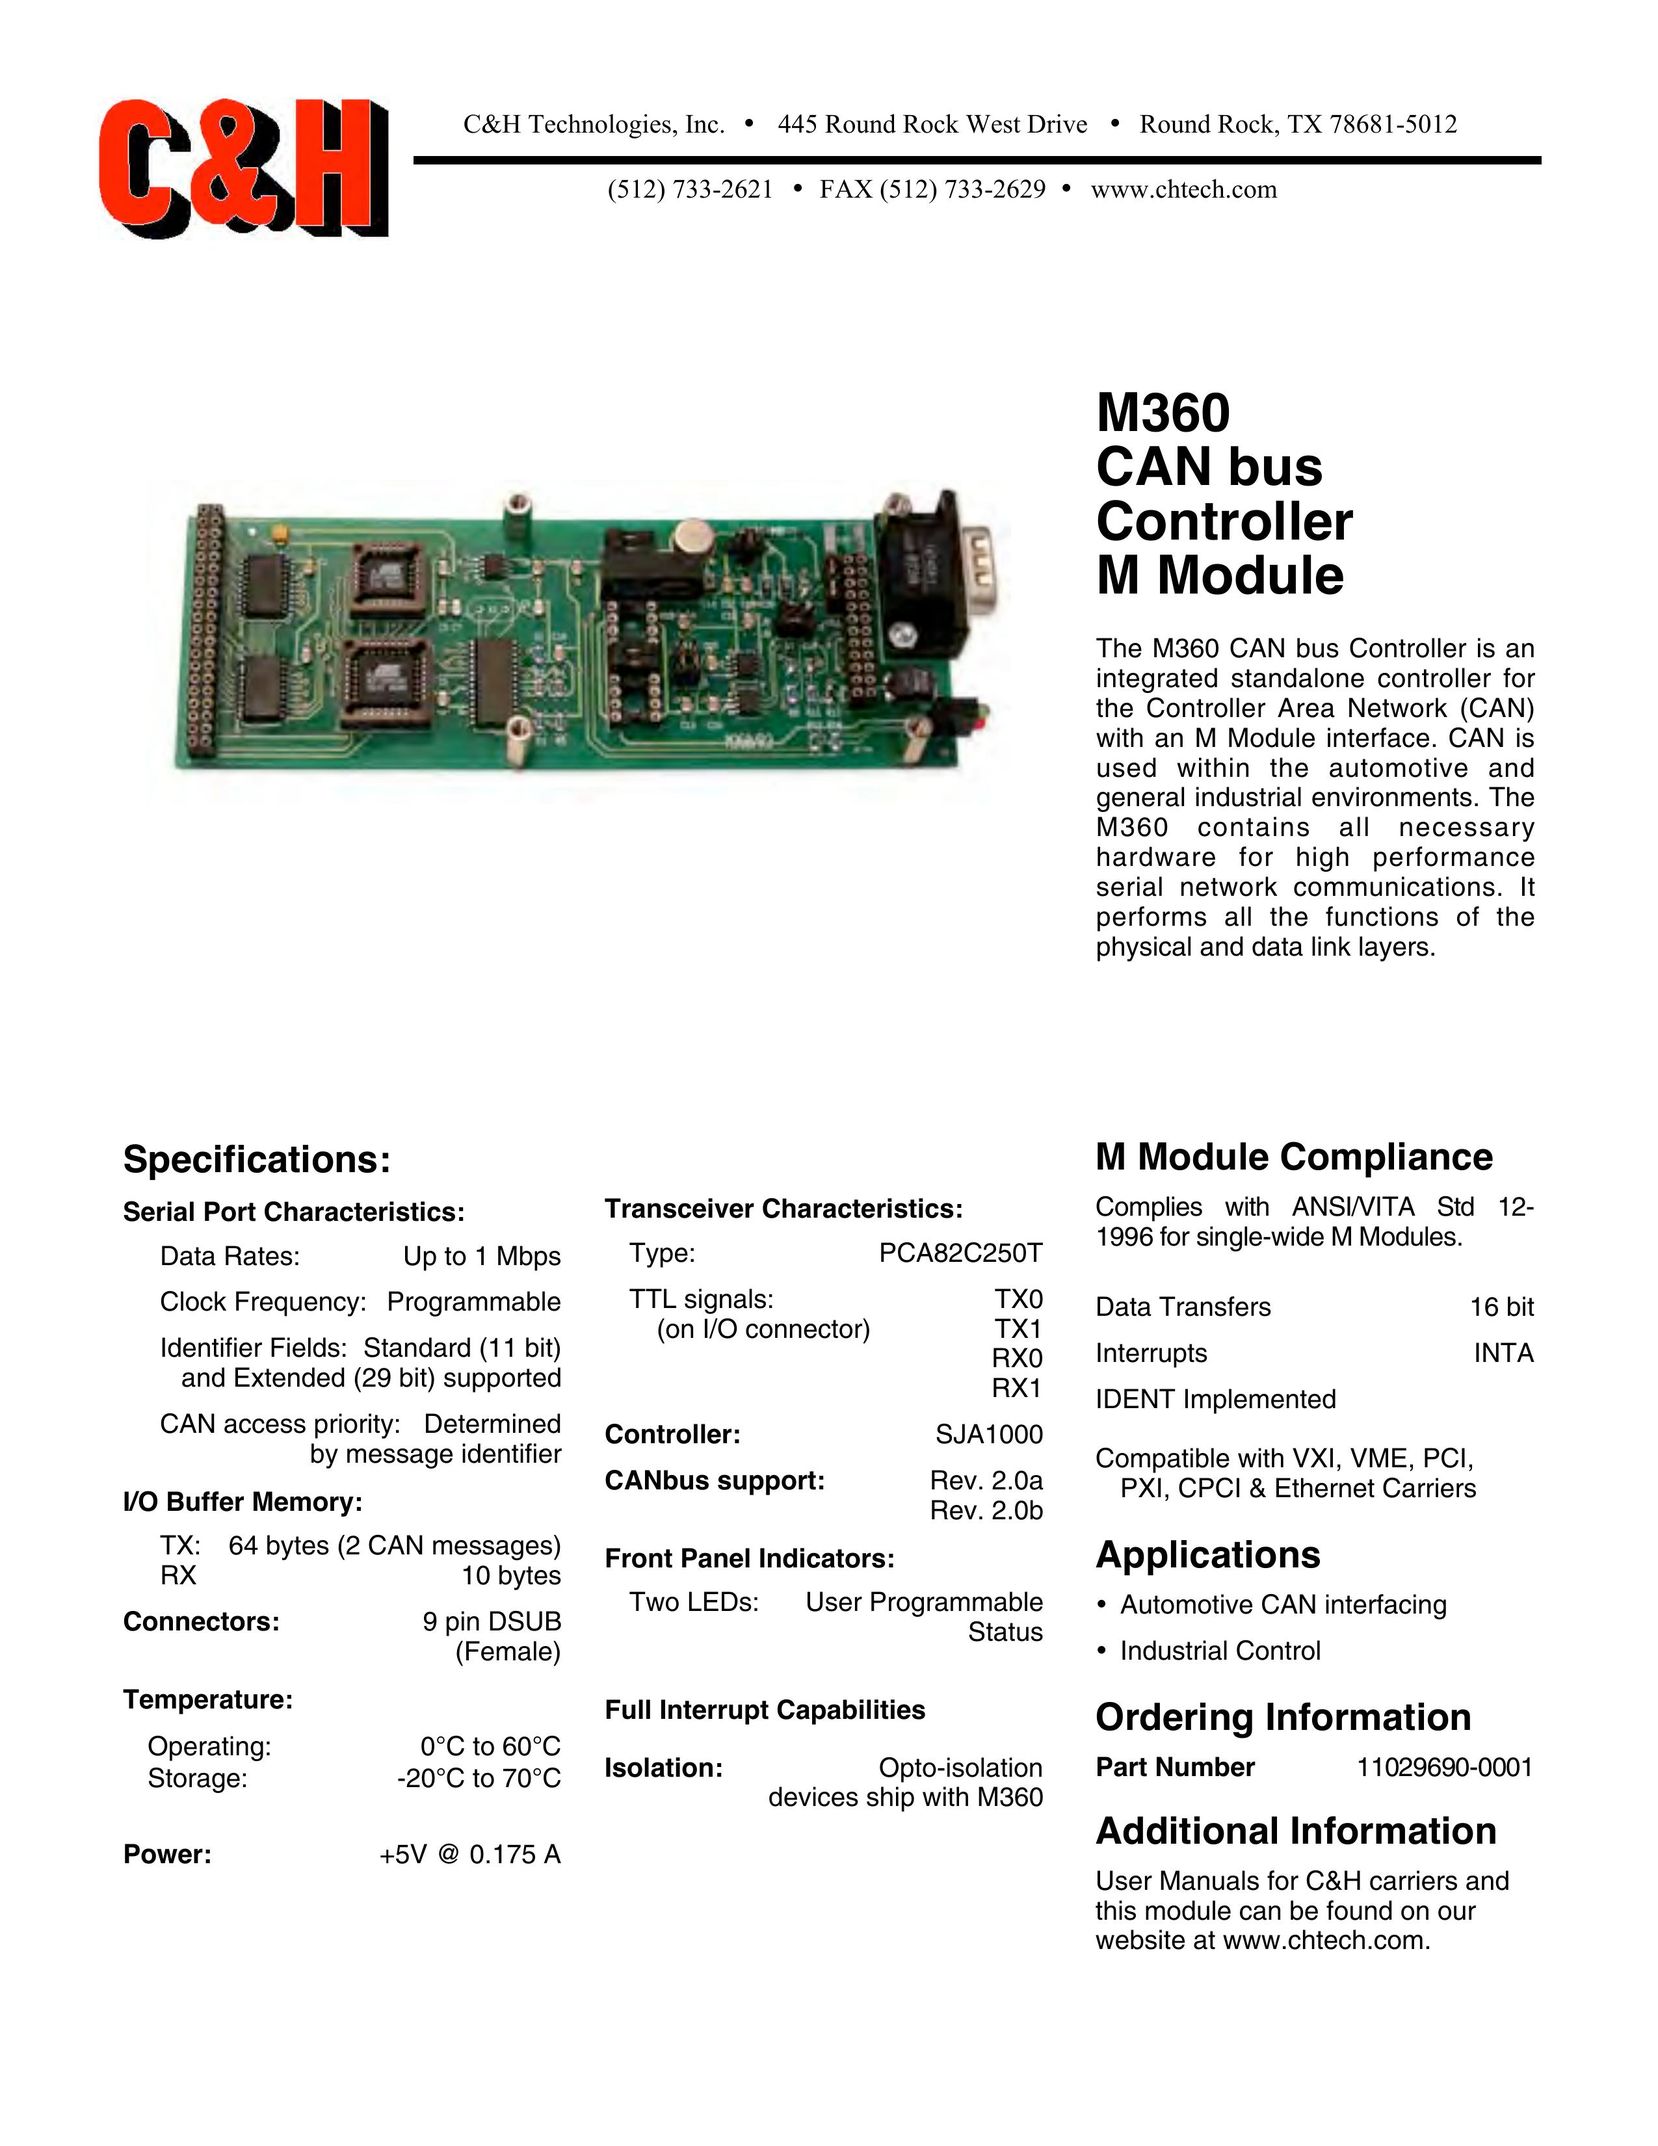 CH Tech M360 Switch User Manual